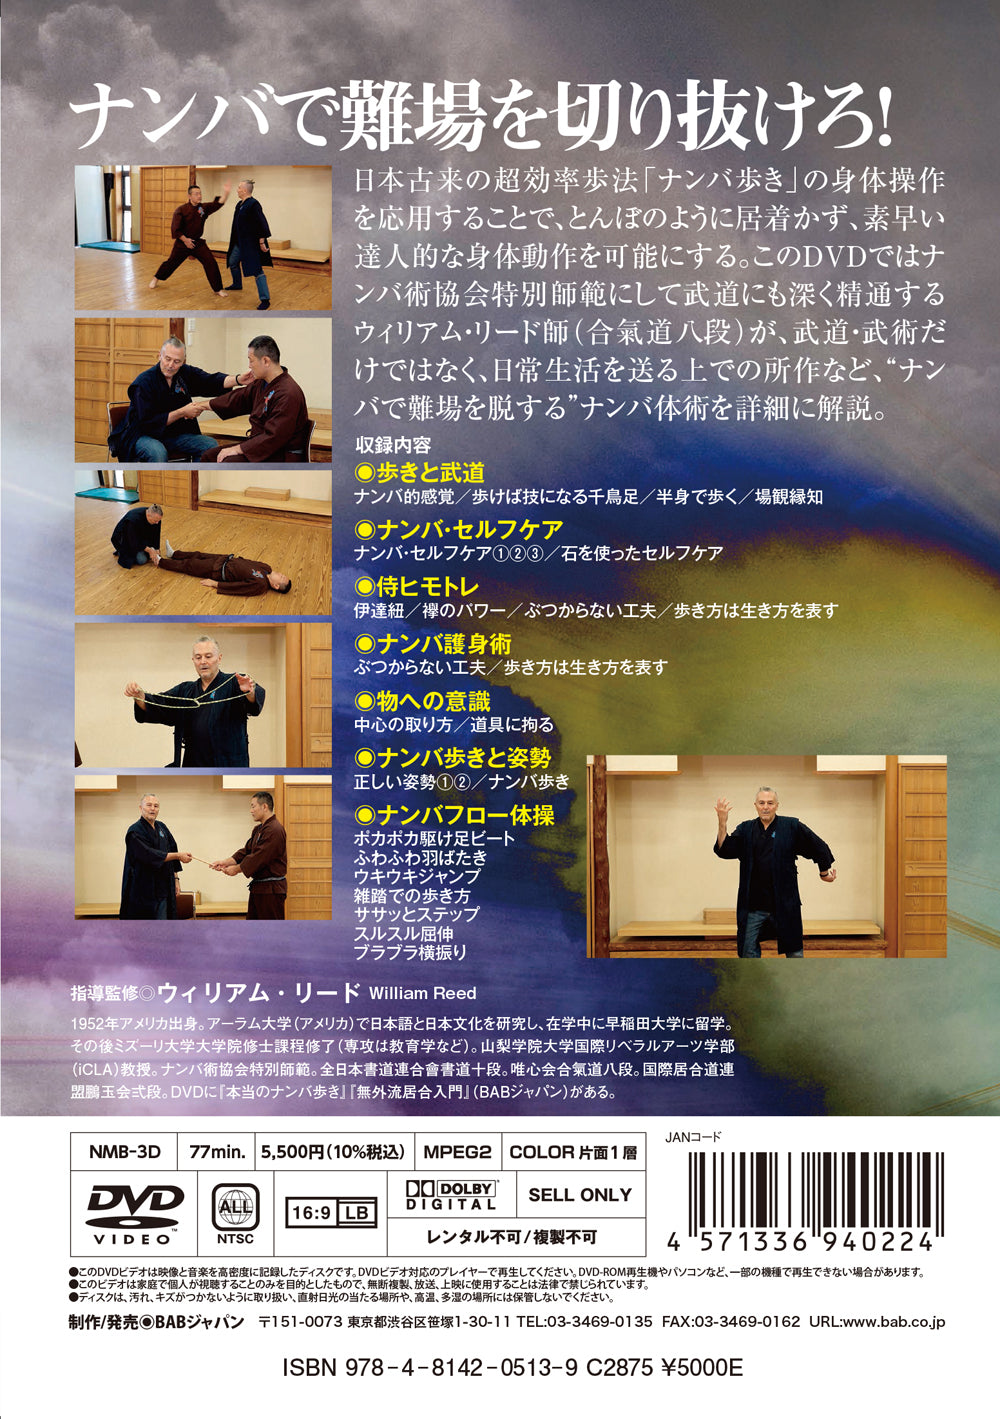 The Samurai Walk Nanba DVD by William Reed